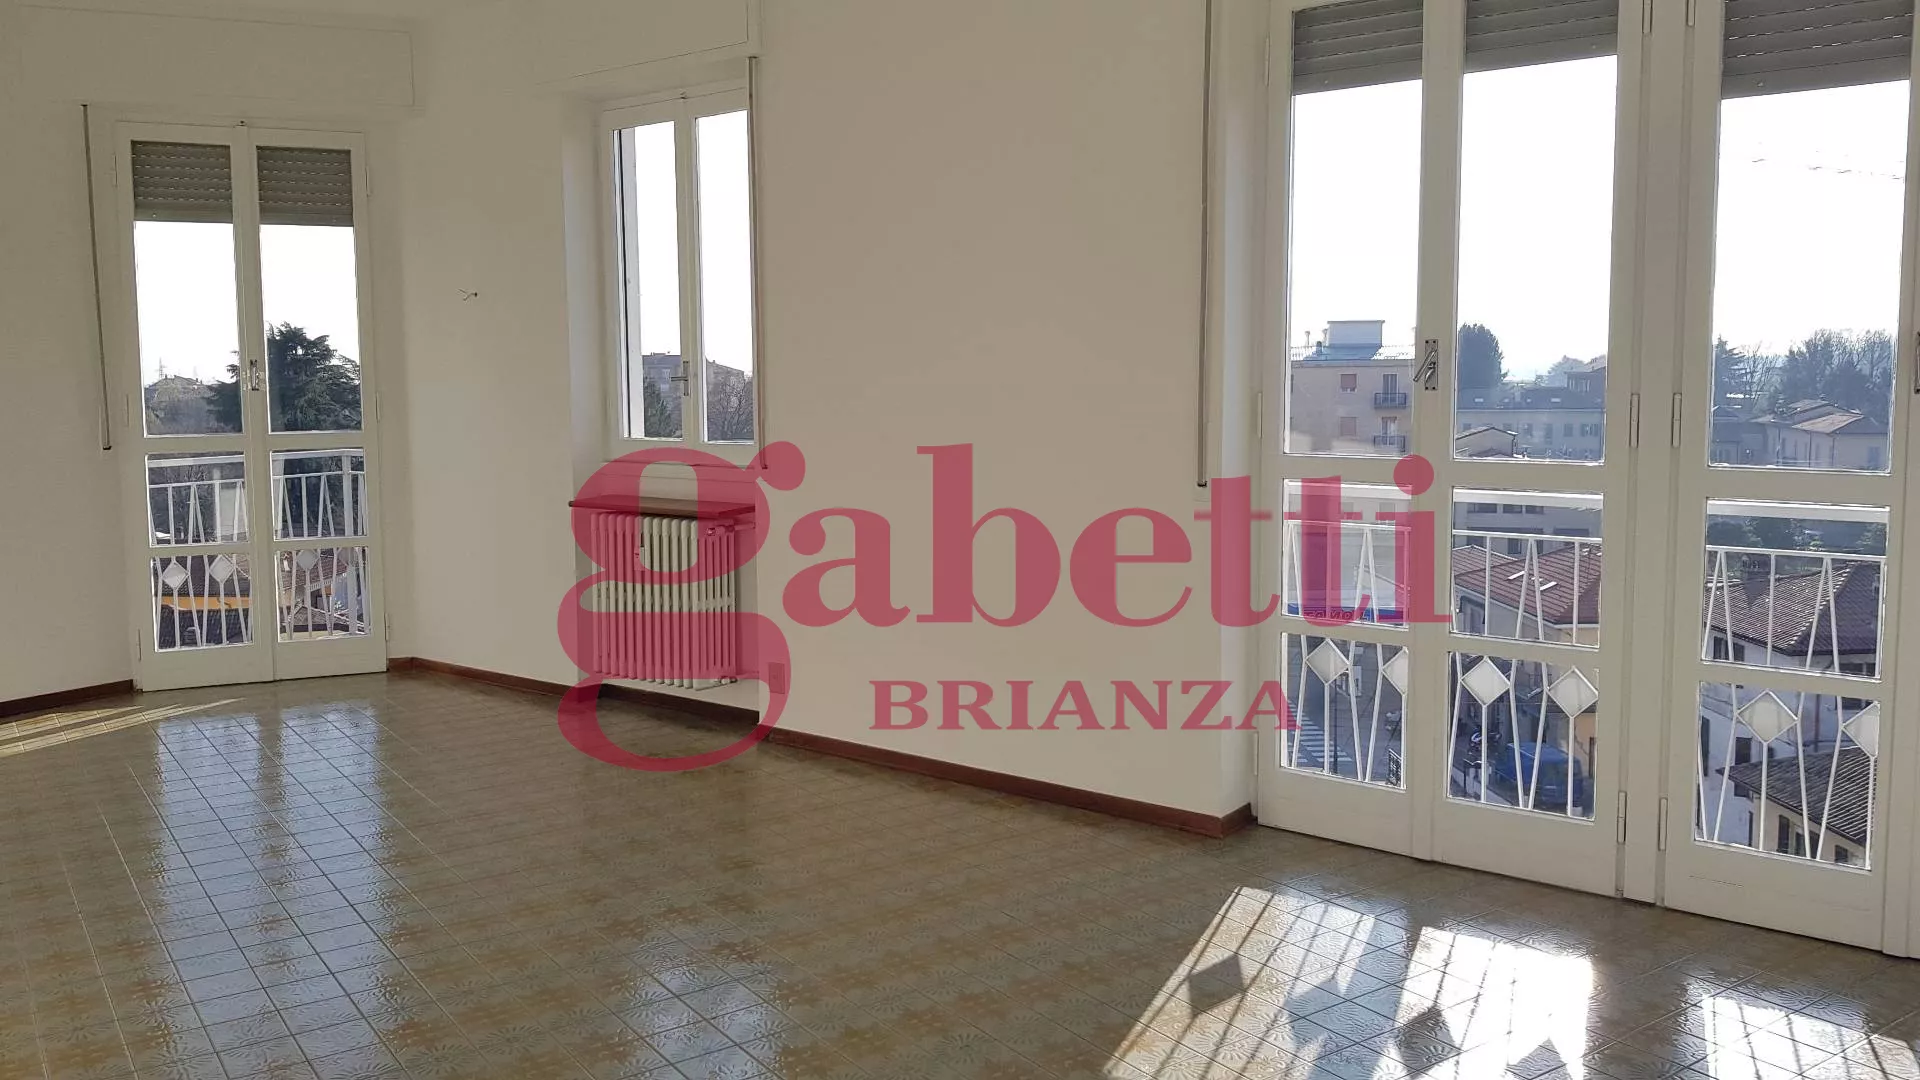 Immagine per Appartamento in vendita a Usmate Velate Via stazione